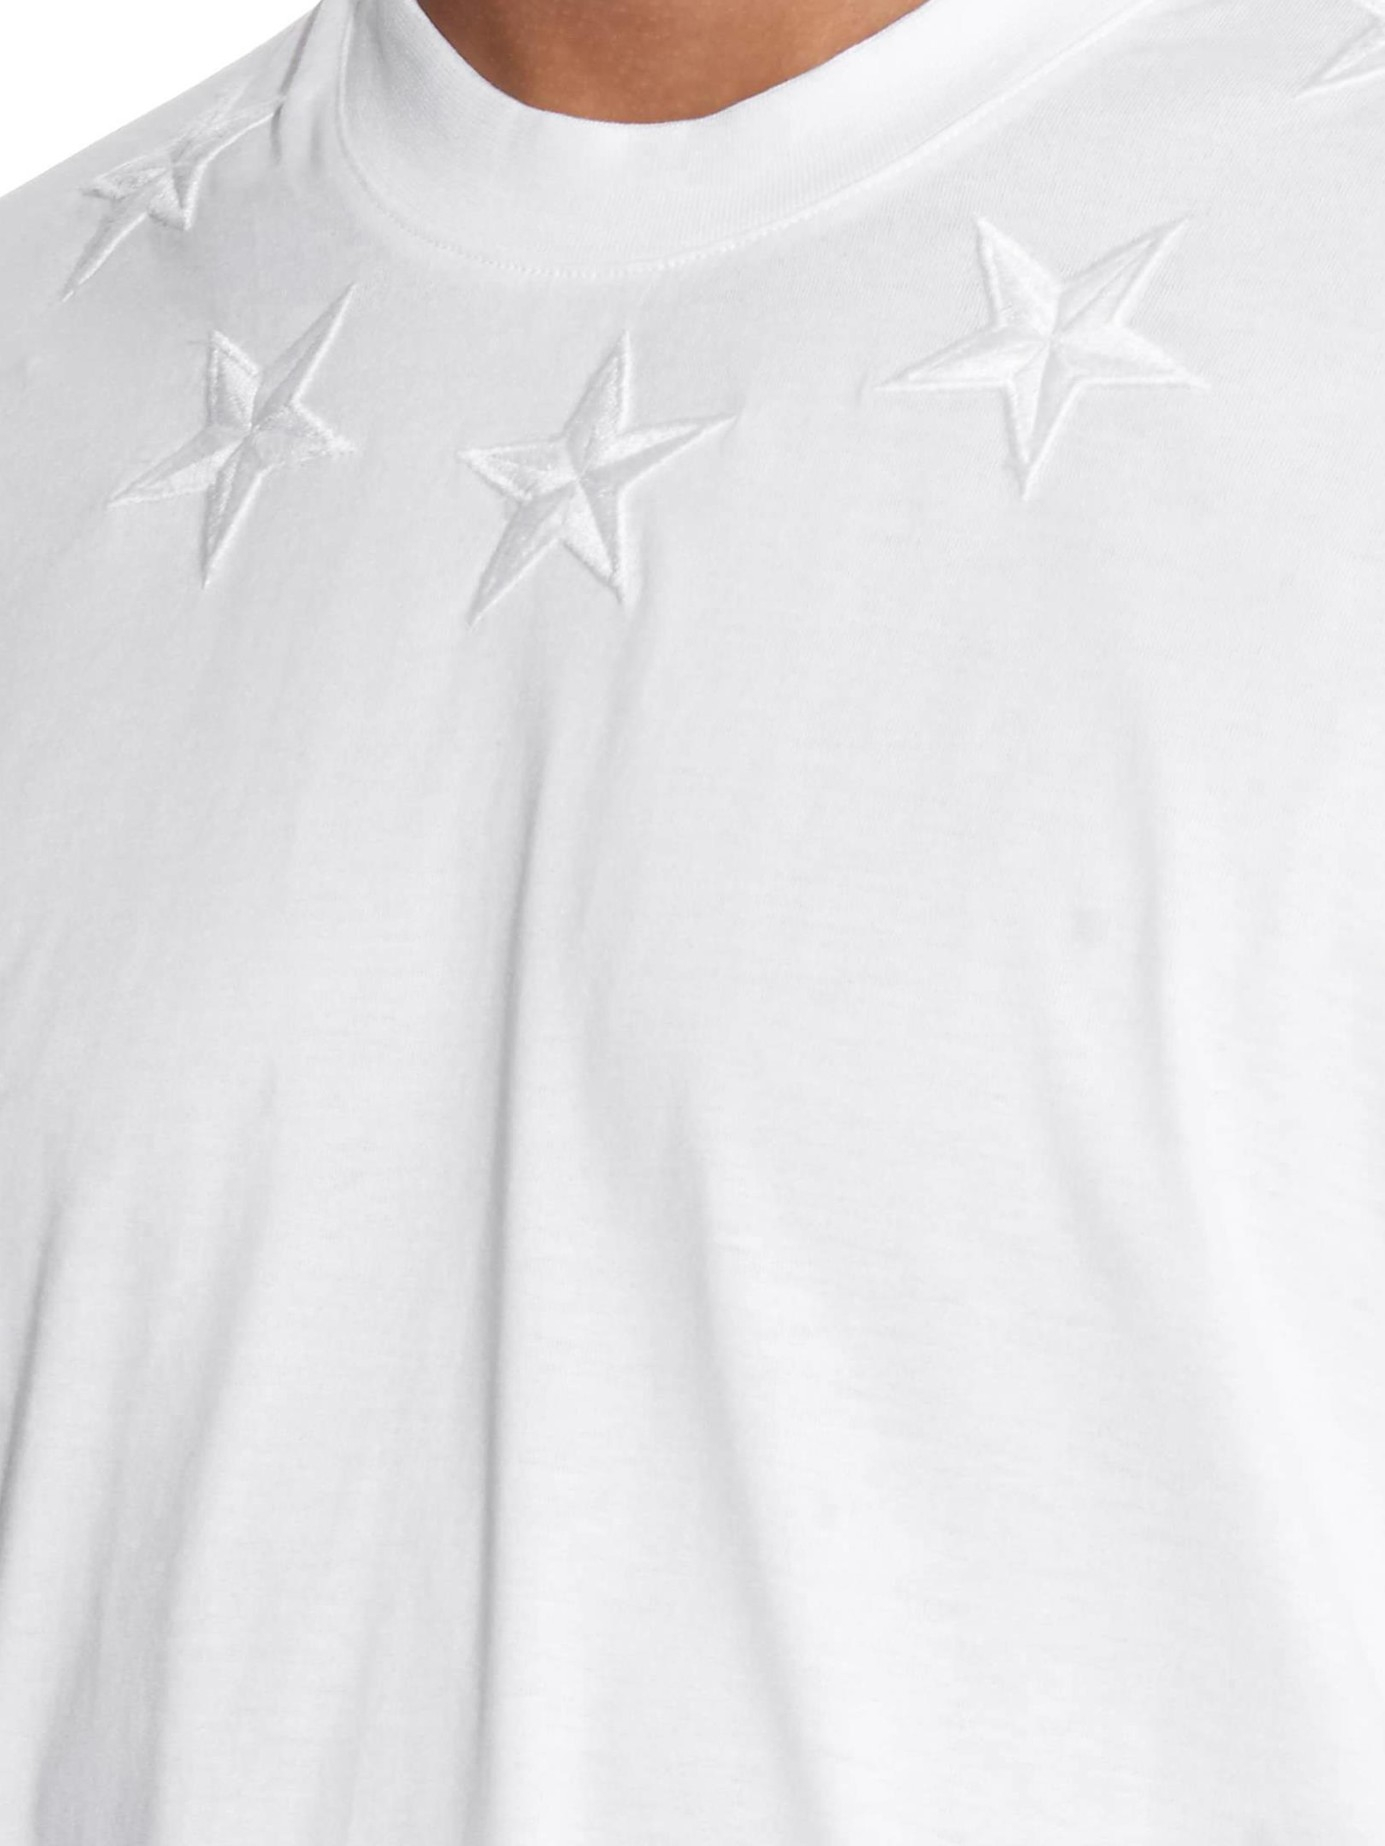 givenchy t shirt white stars